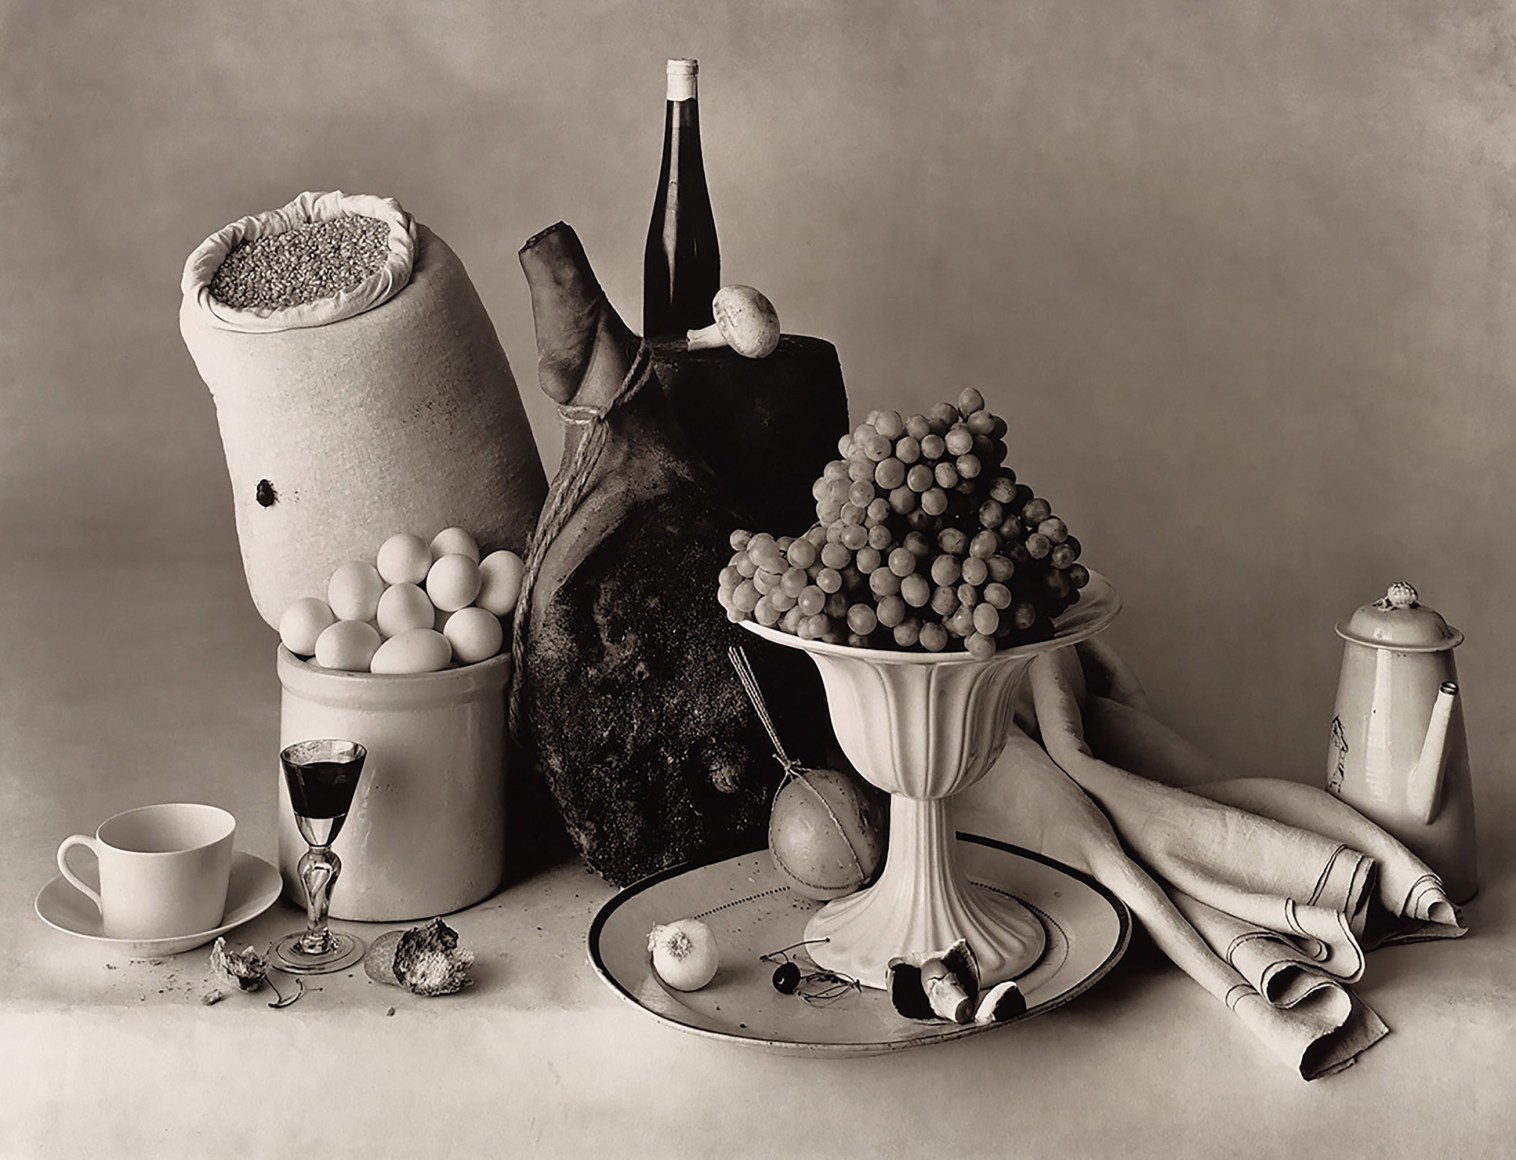 Irving Penn, New York Still Life, 1947. Studio still life featuring eggs, grapes, cloth, a mug and liquor glass, teapot, etc.